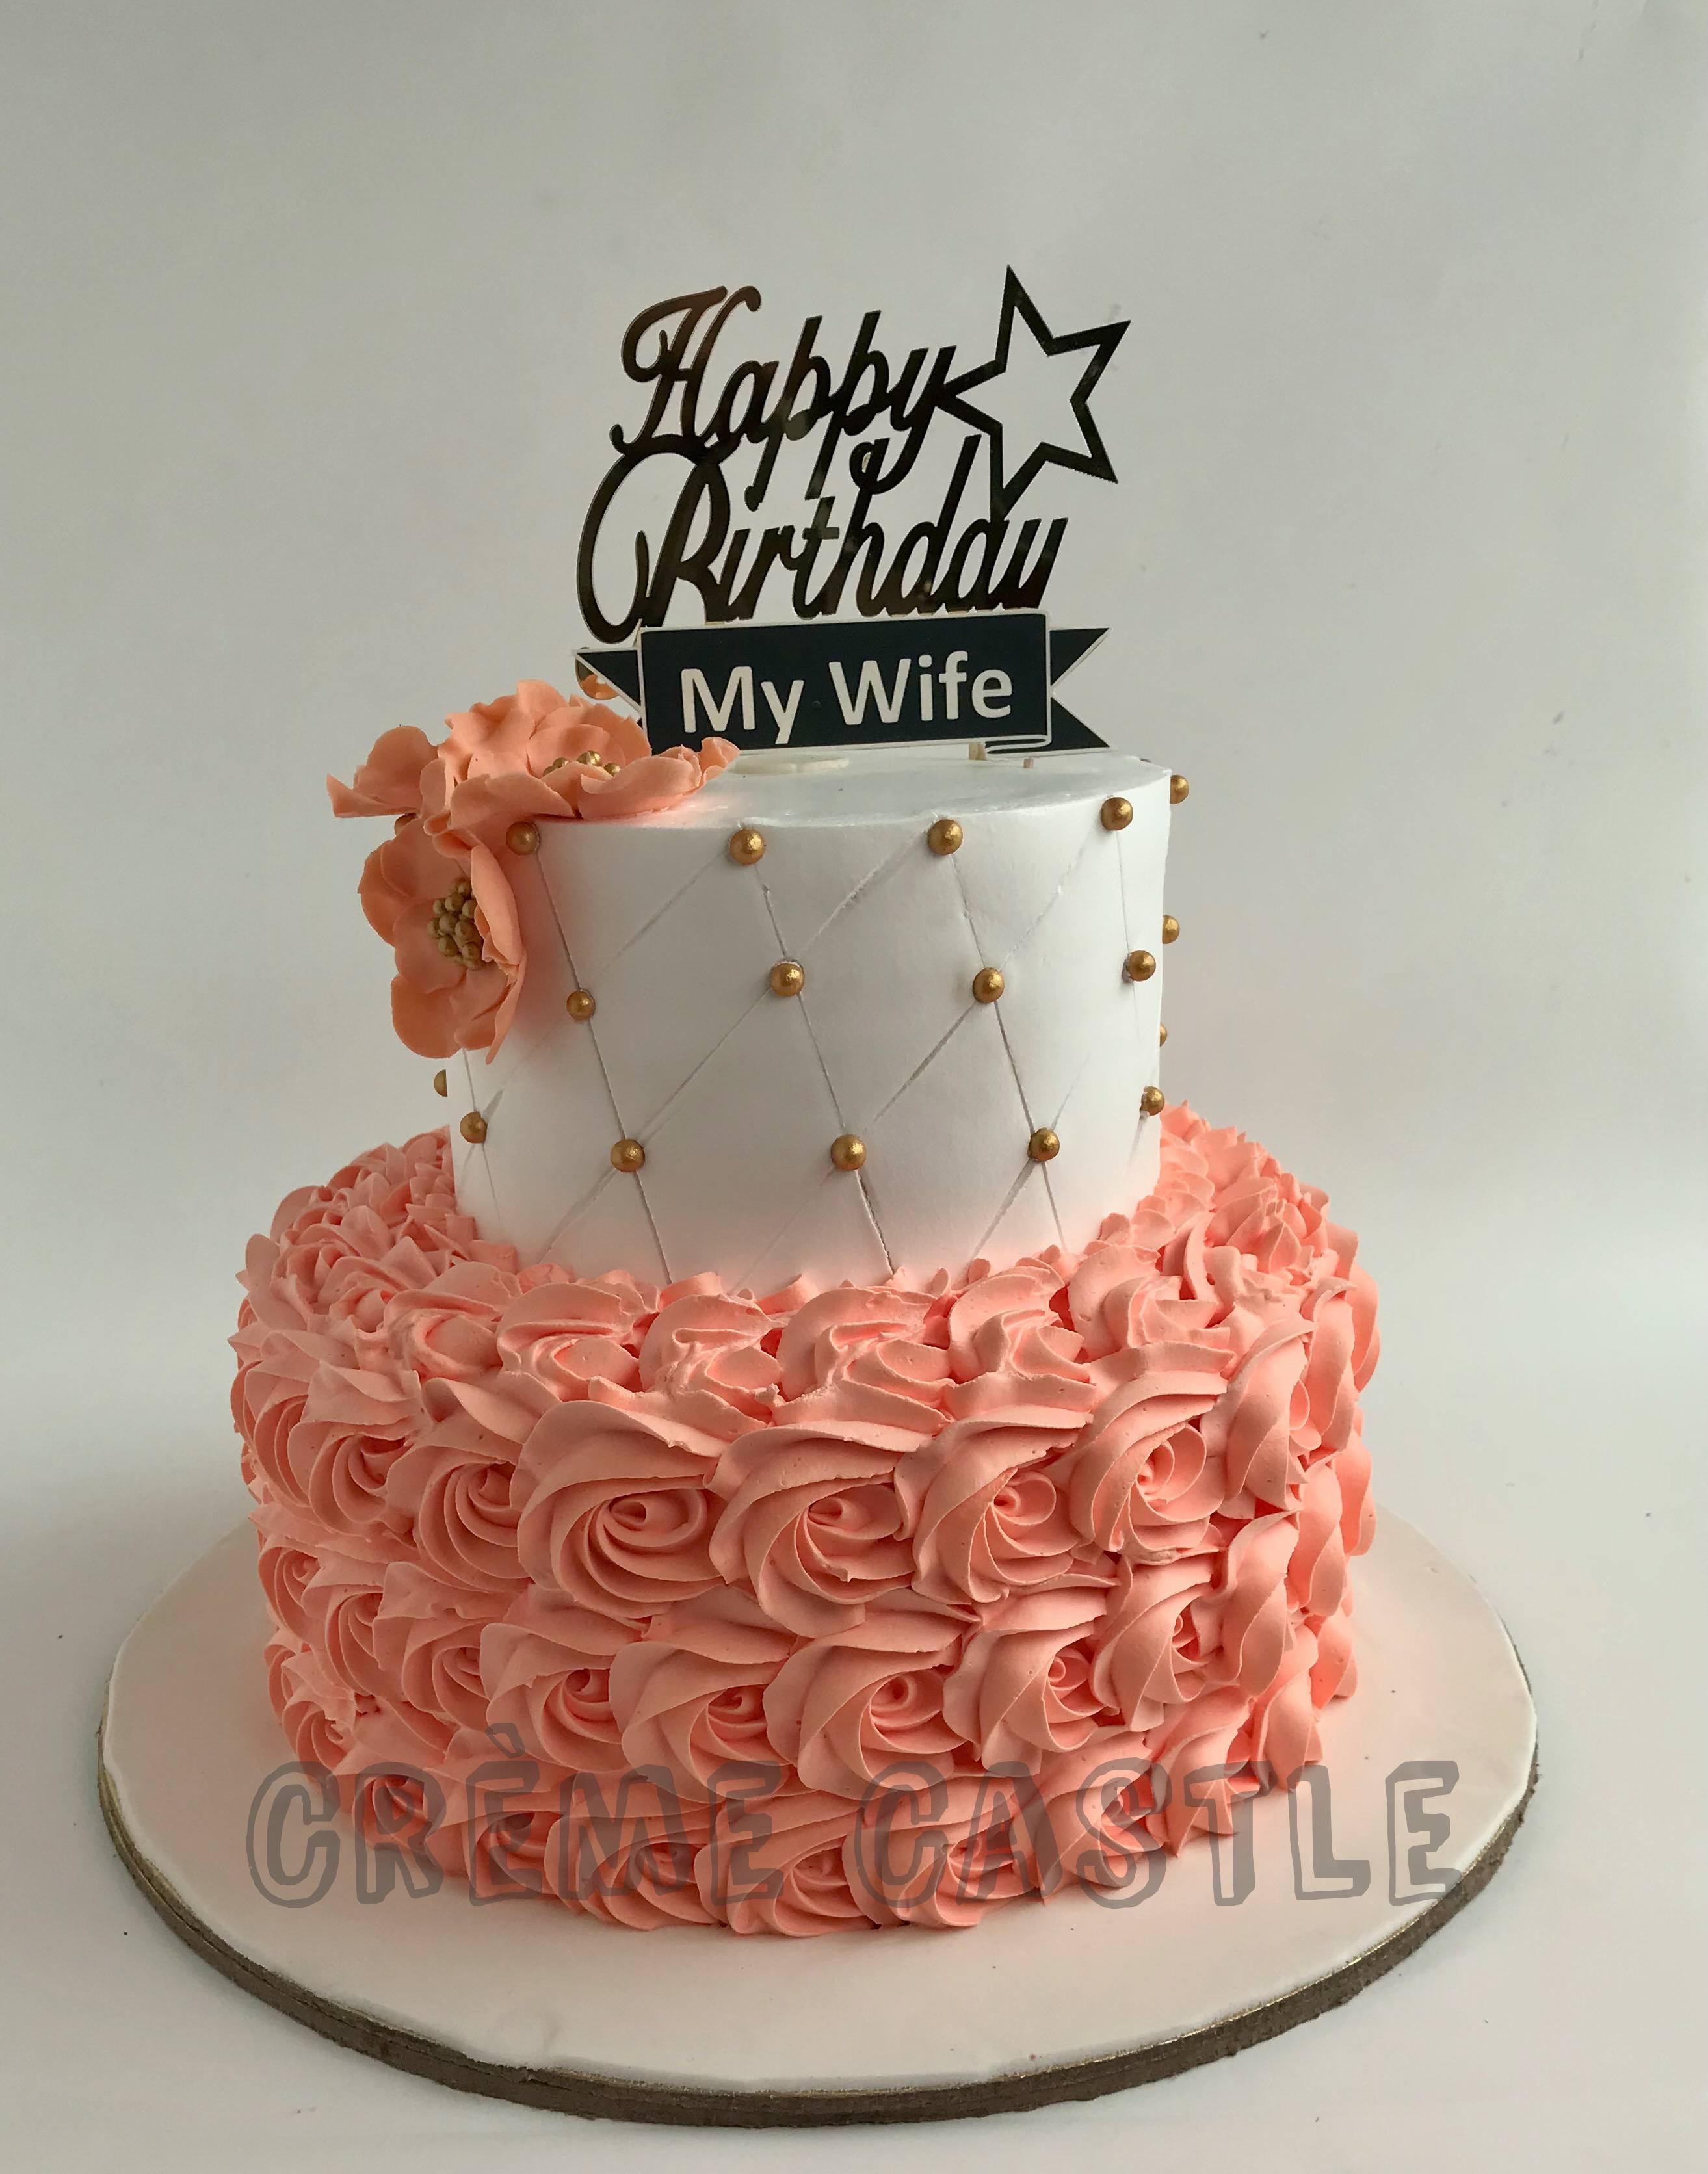 Custom cake - 4x2 inches - Happy Birthday, Clee Min Ho - Pipie Co Bread Cake  Pastries Iligan